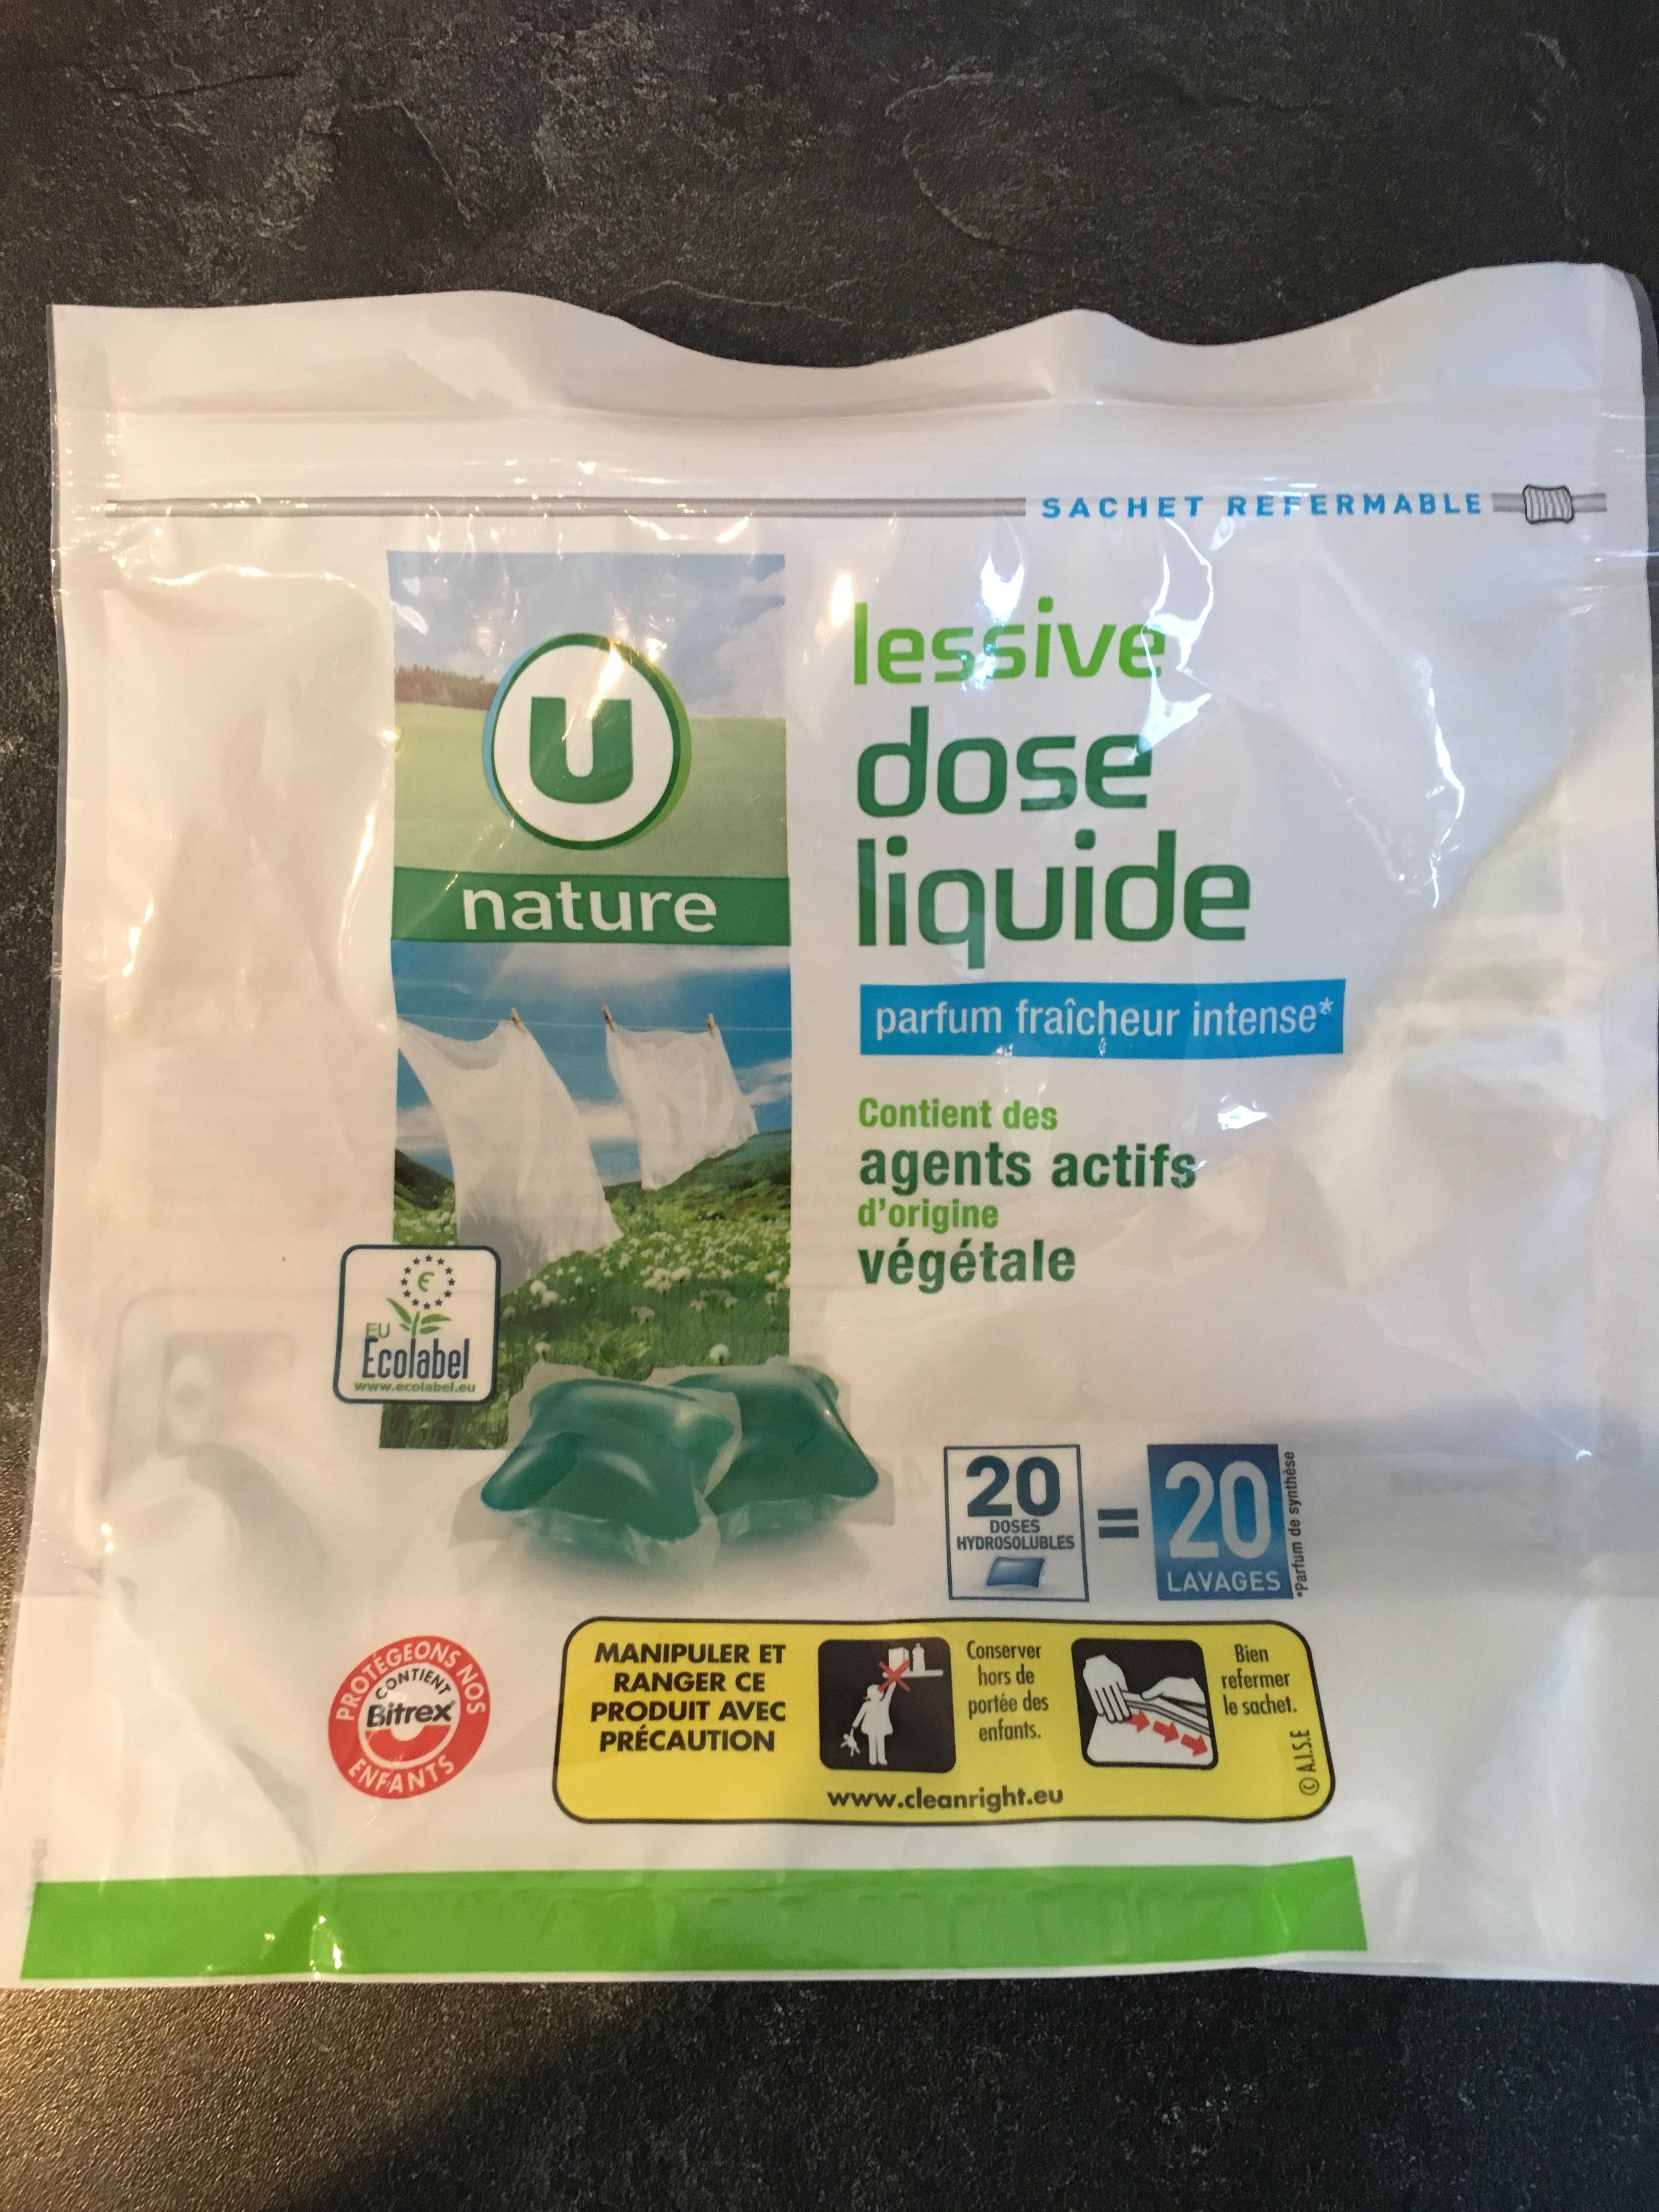 Lessive dose liquide - Product - fr